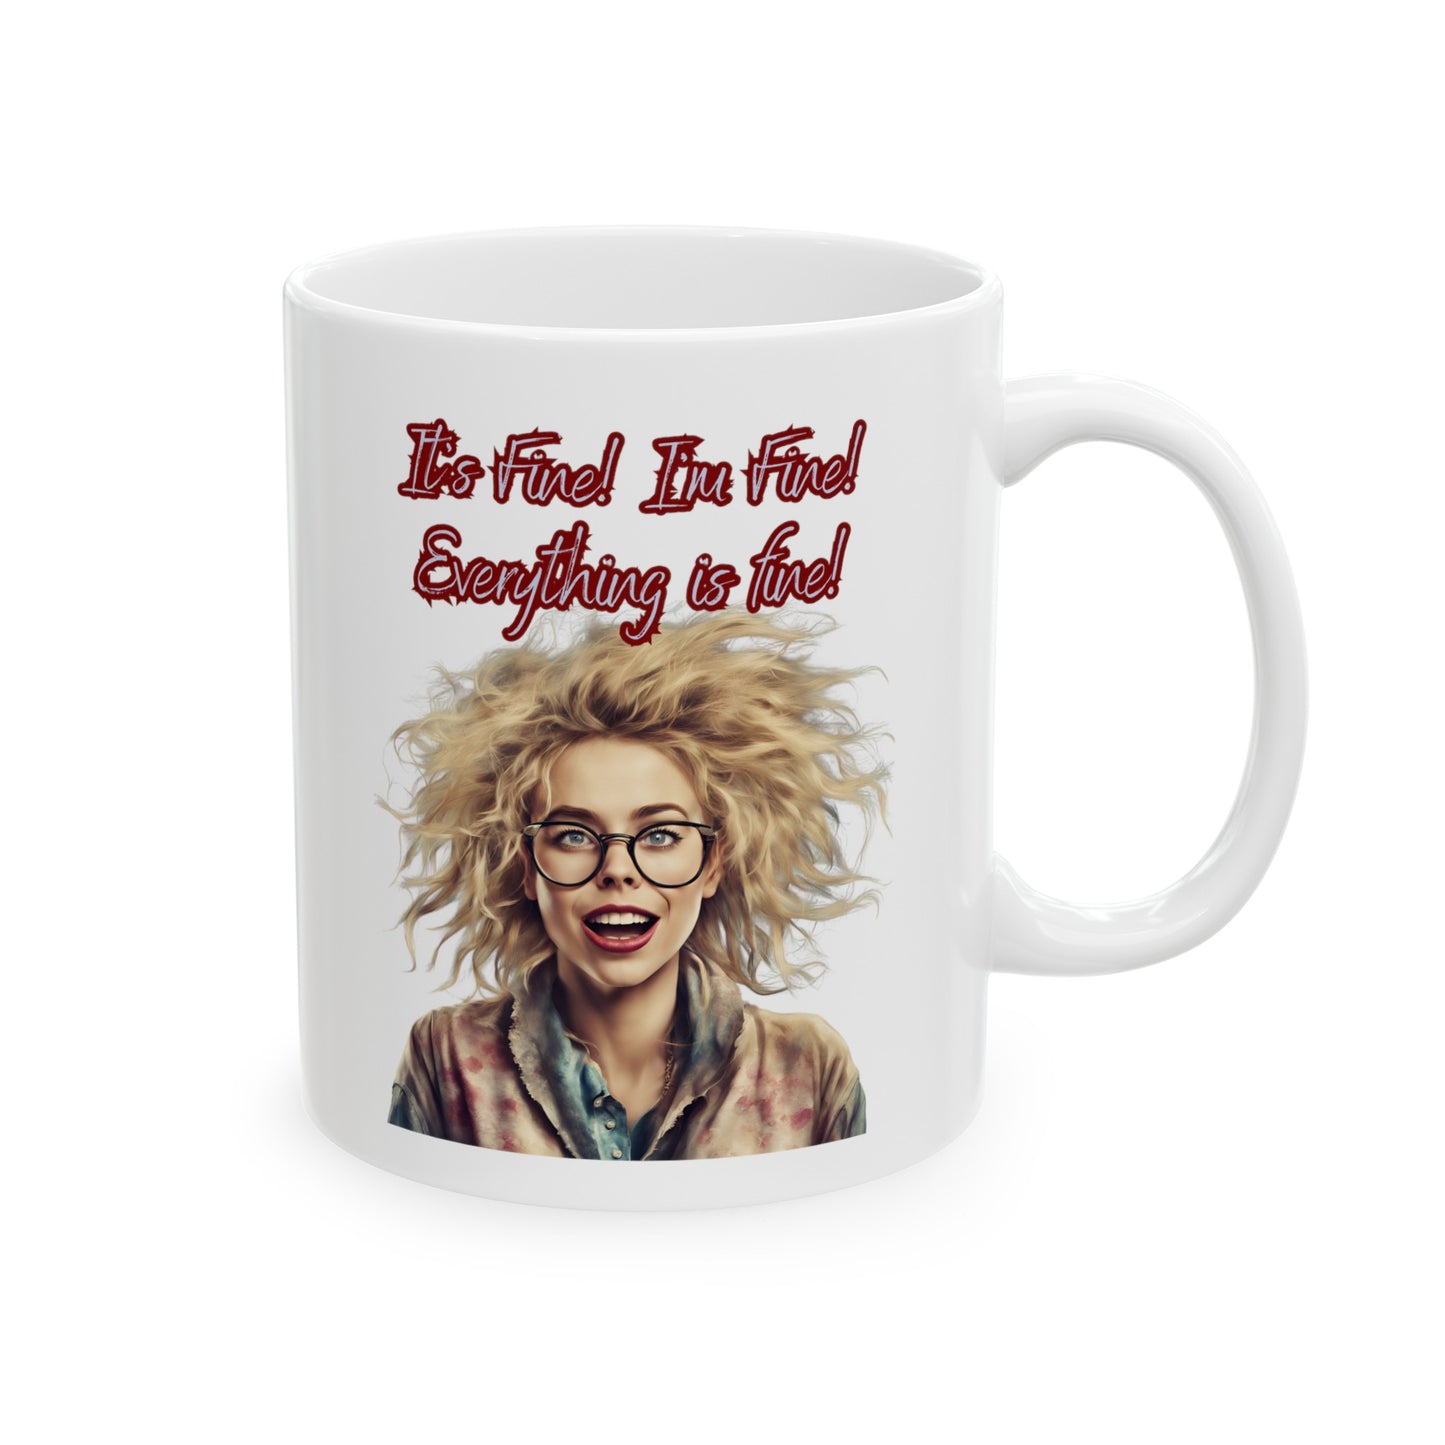 Crazy Mom Its Fine! Mug - The Witchy Gypsy